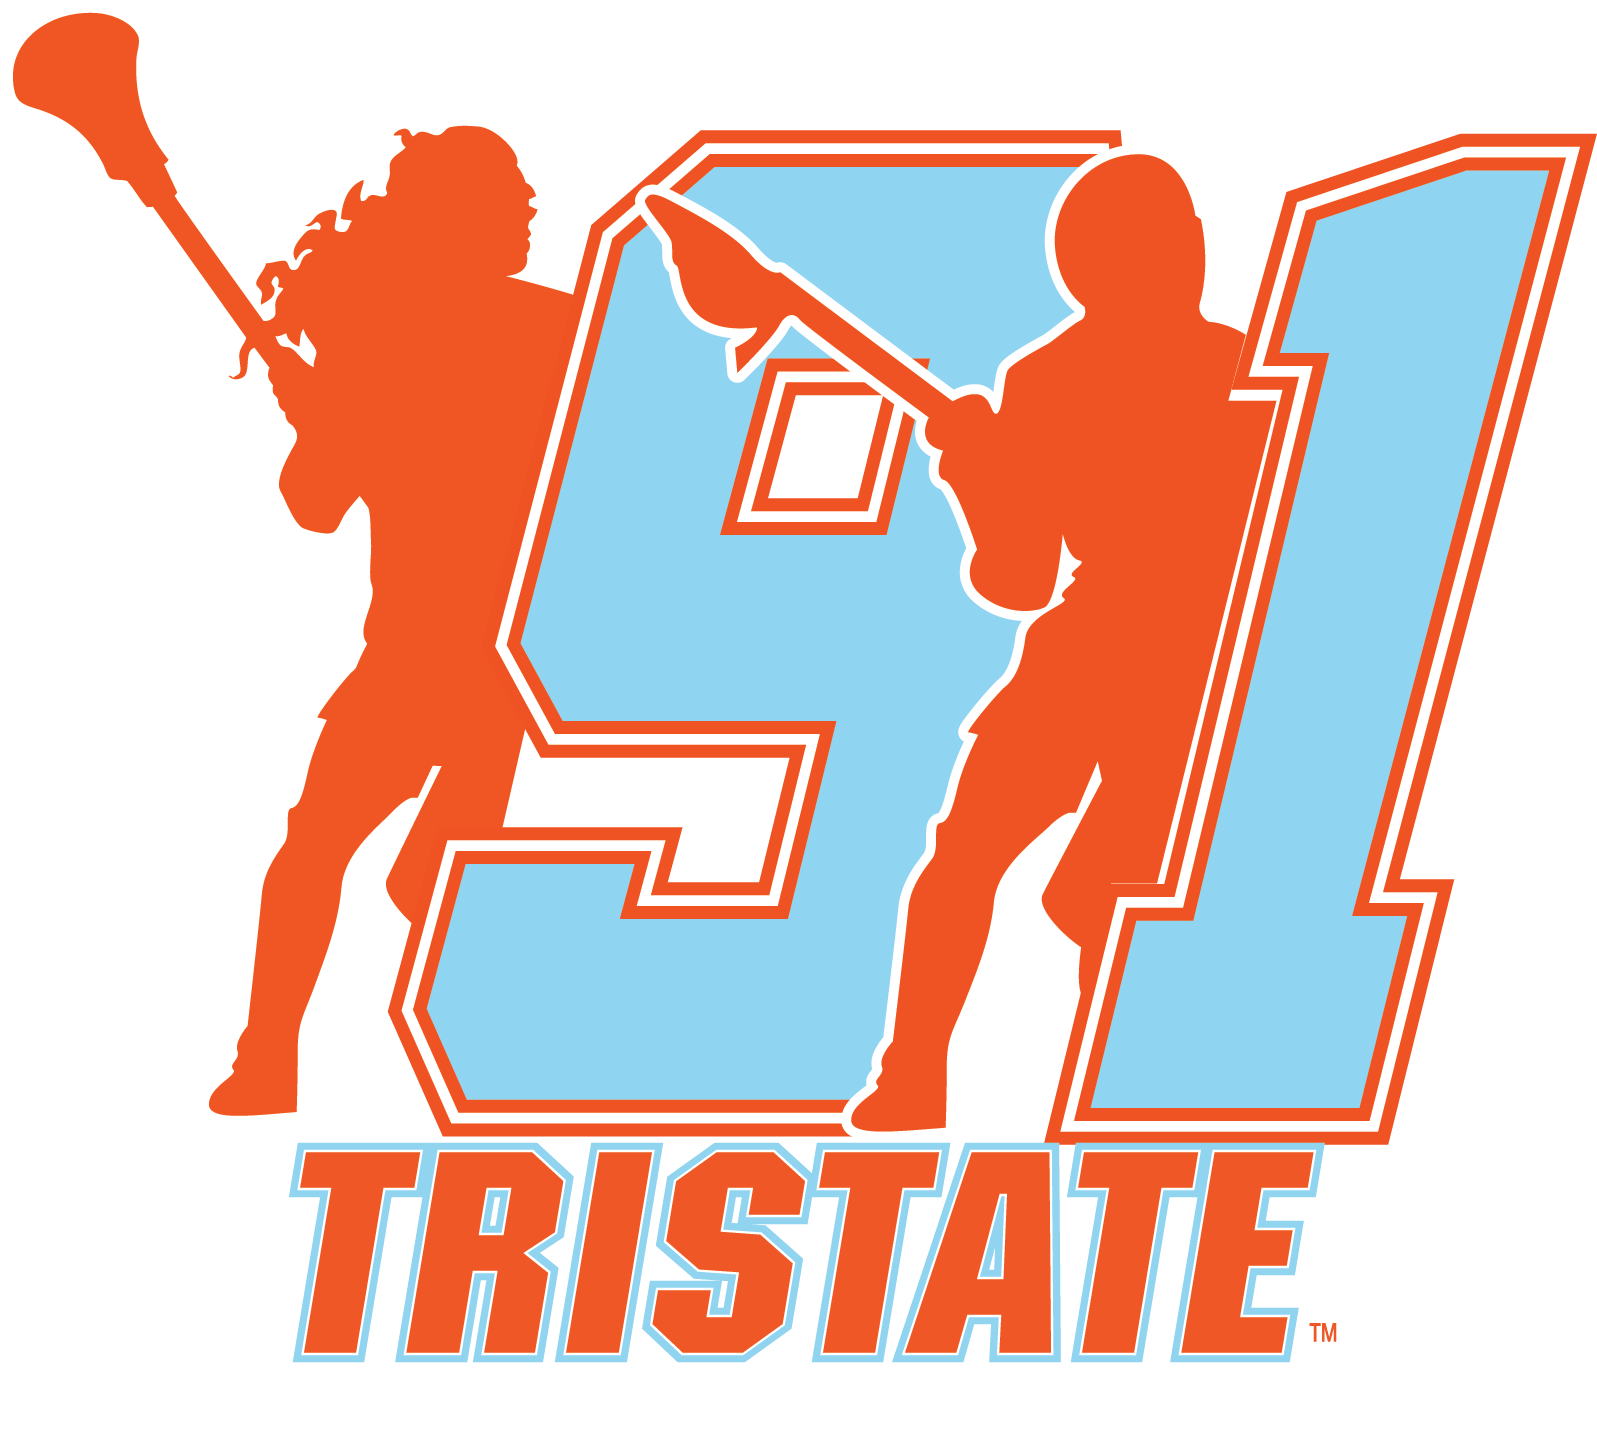 Team 91 logo